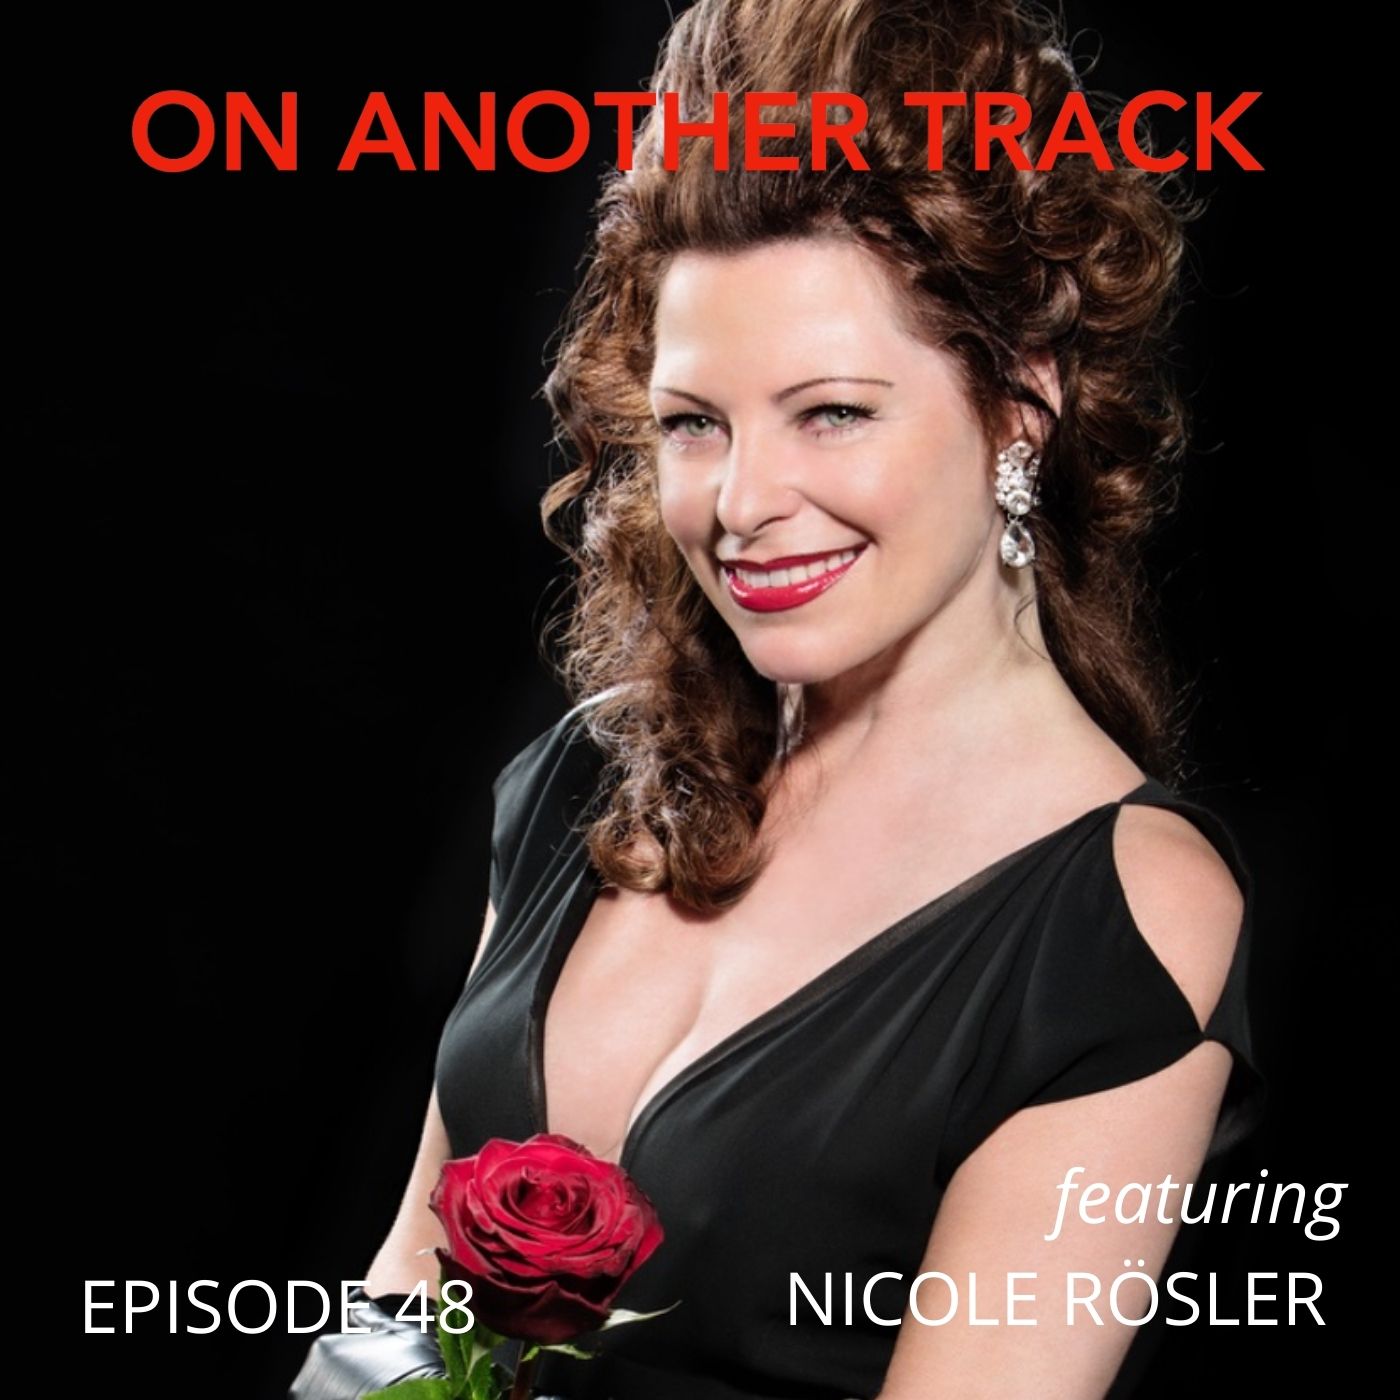 Nicole Rösler - Being a brand ambassador to James Bond has some merit!